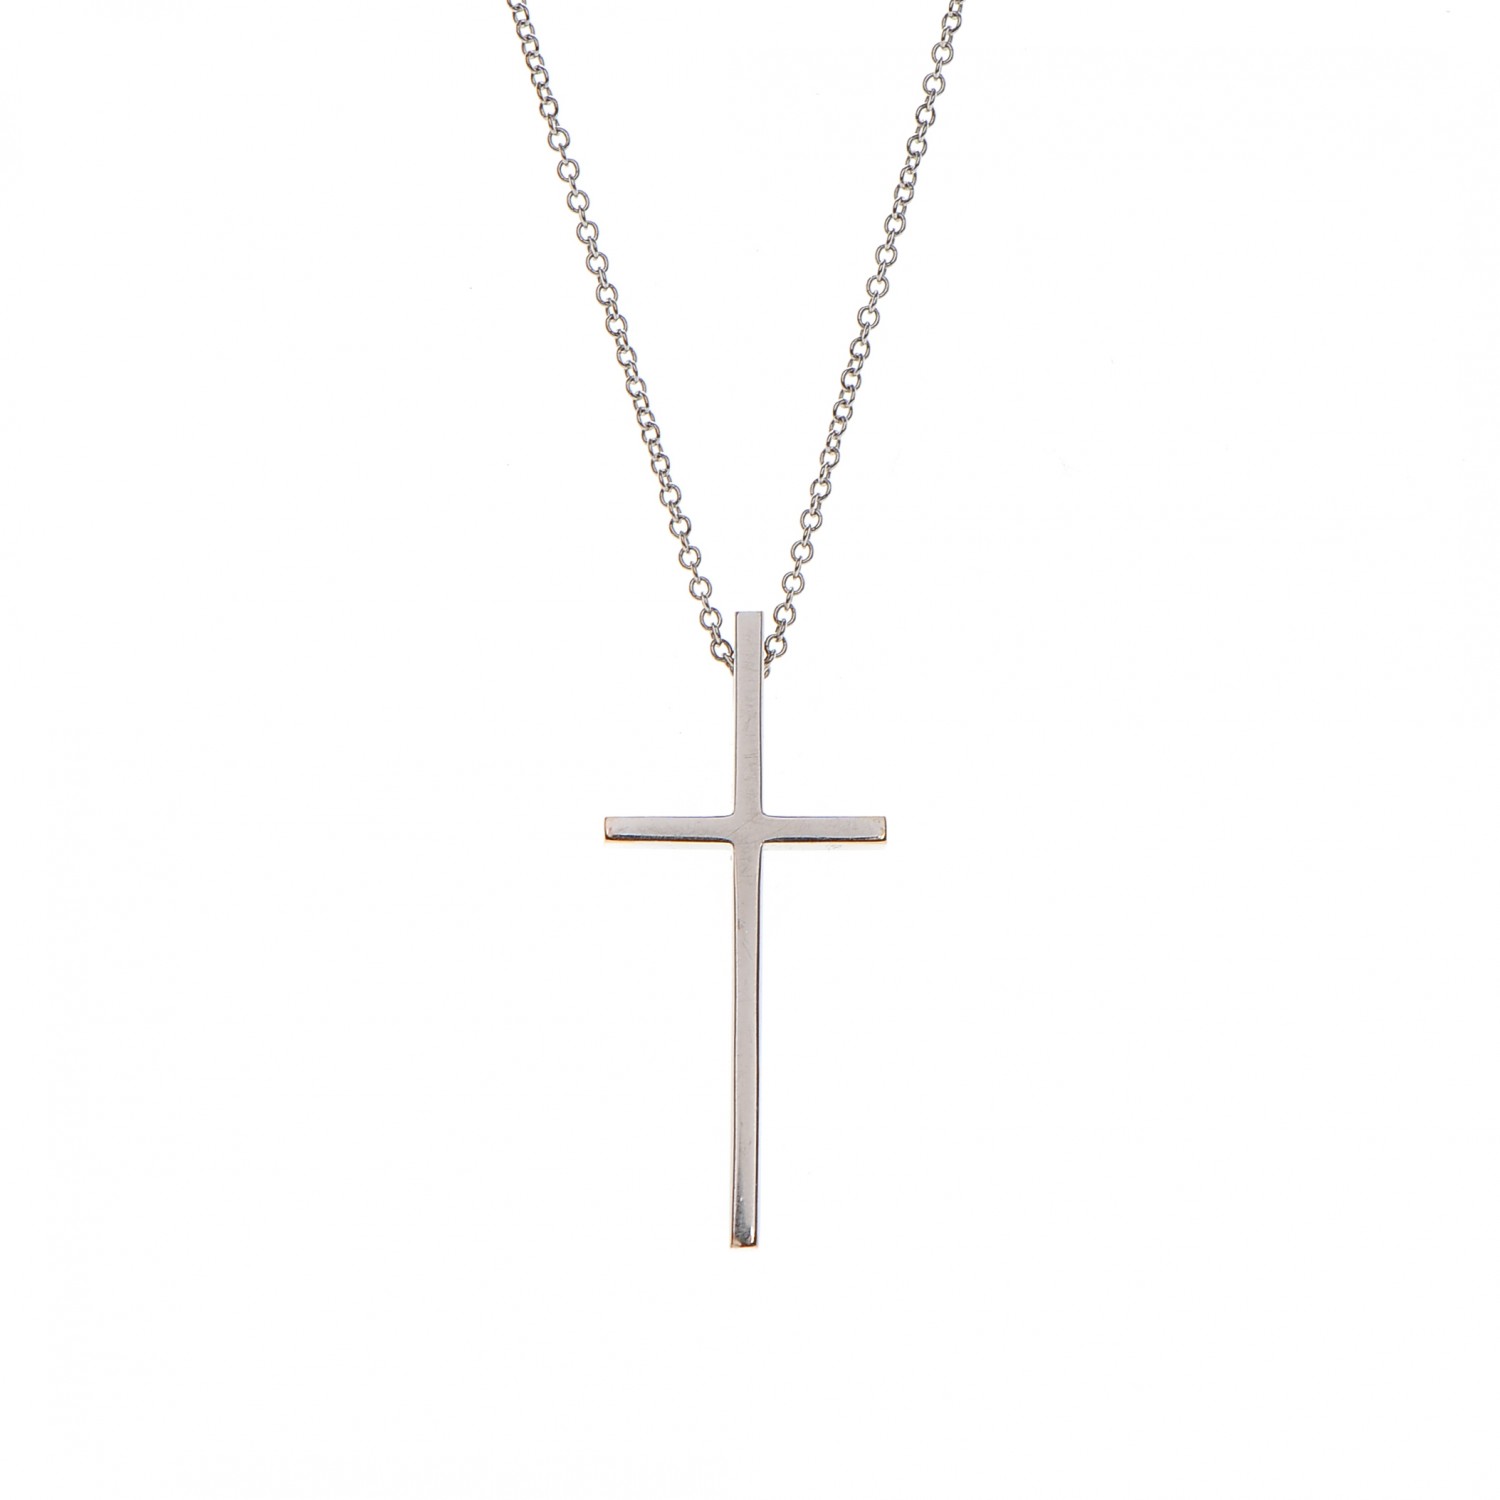 Tiffany 18k White Gold Metro Cross Pendant Necklace 189345 3581